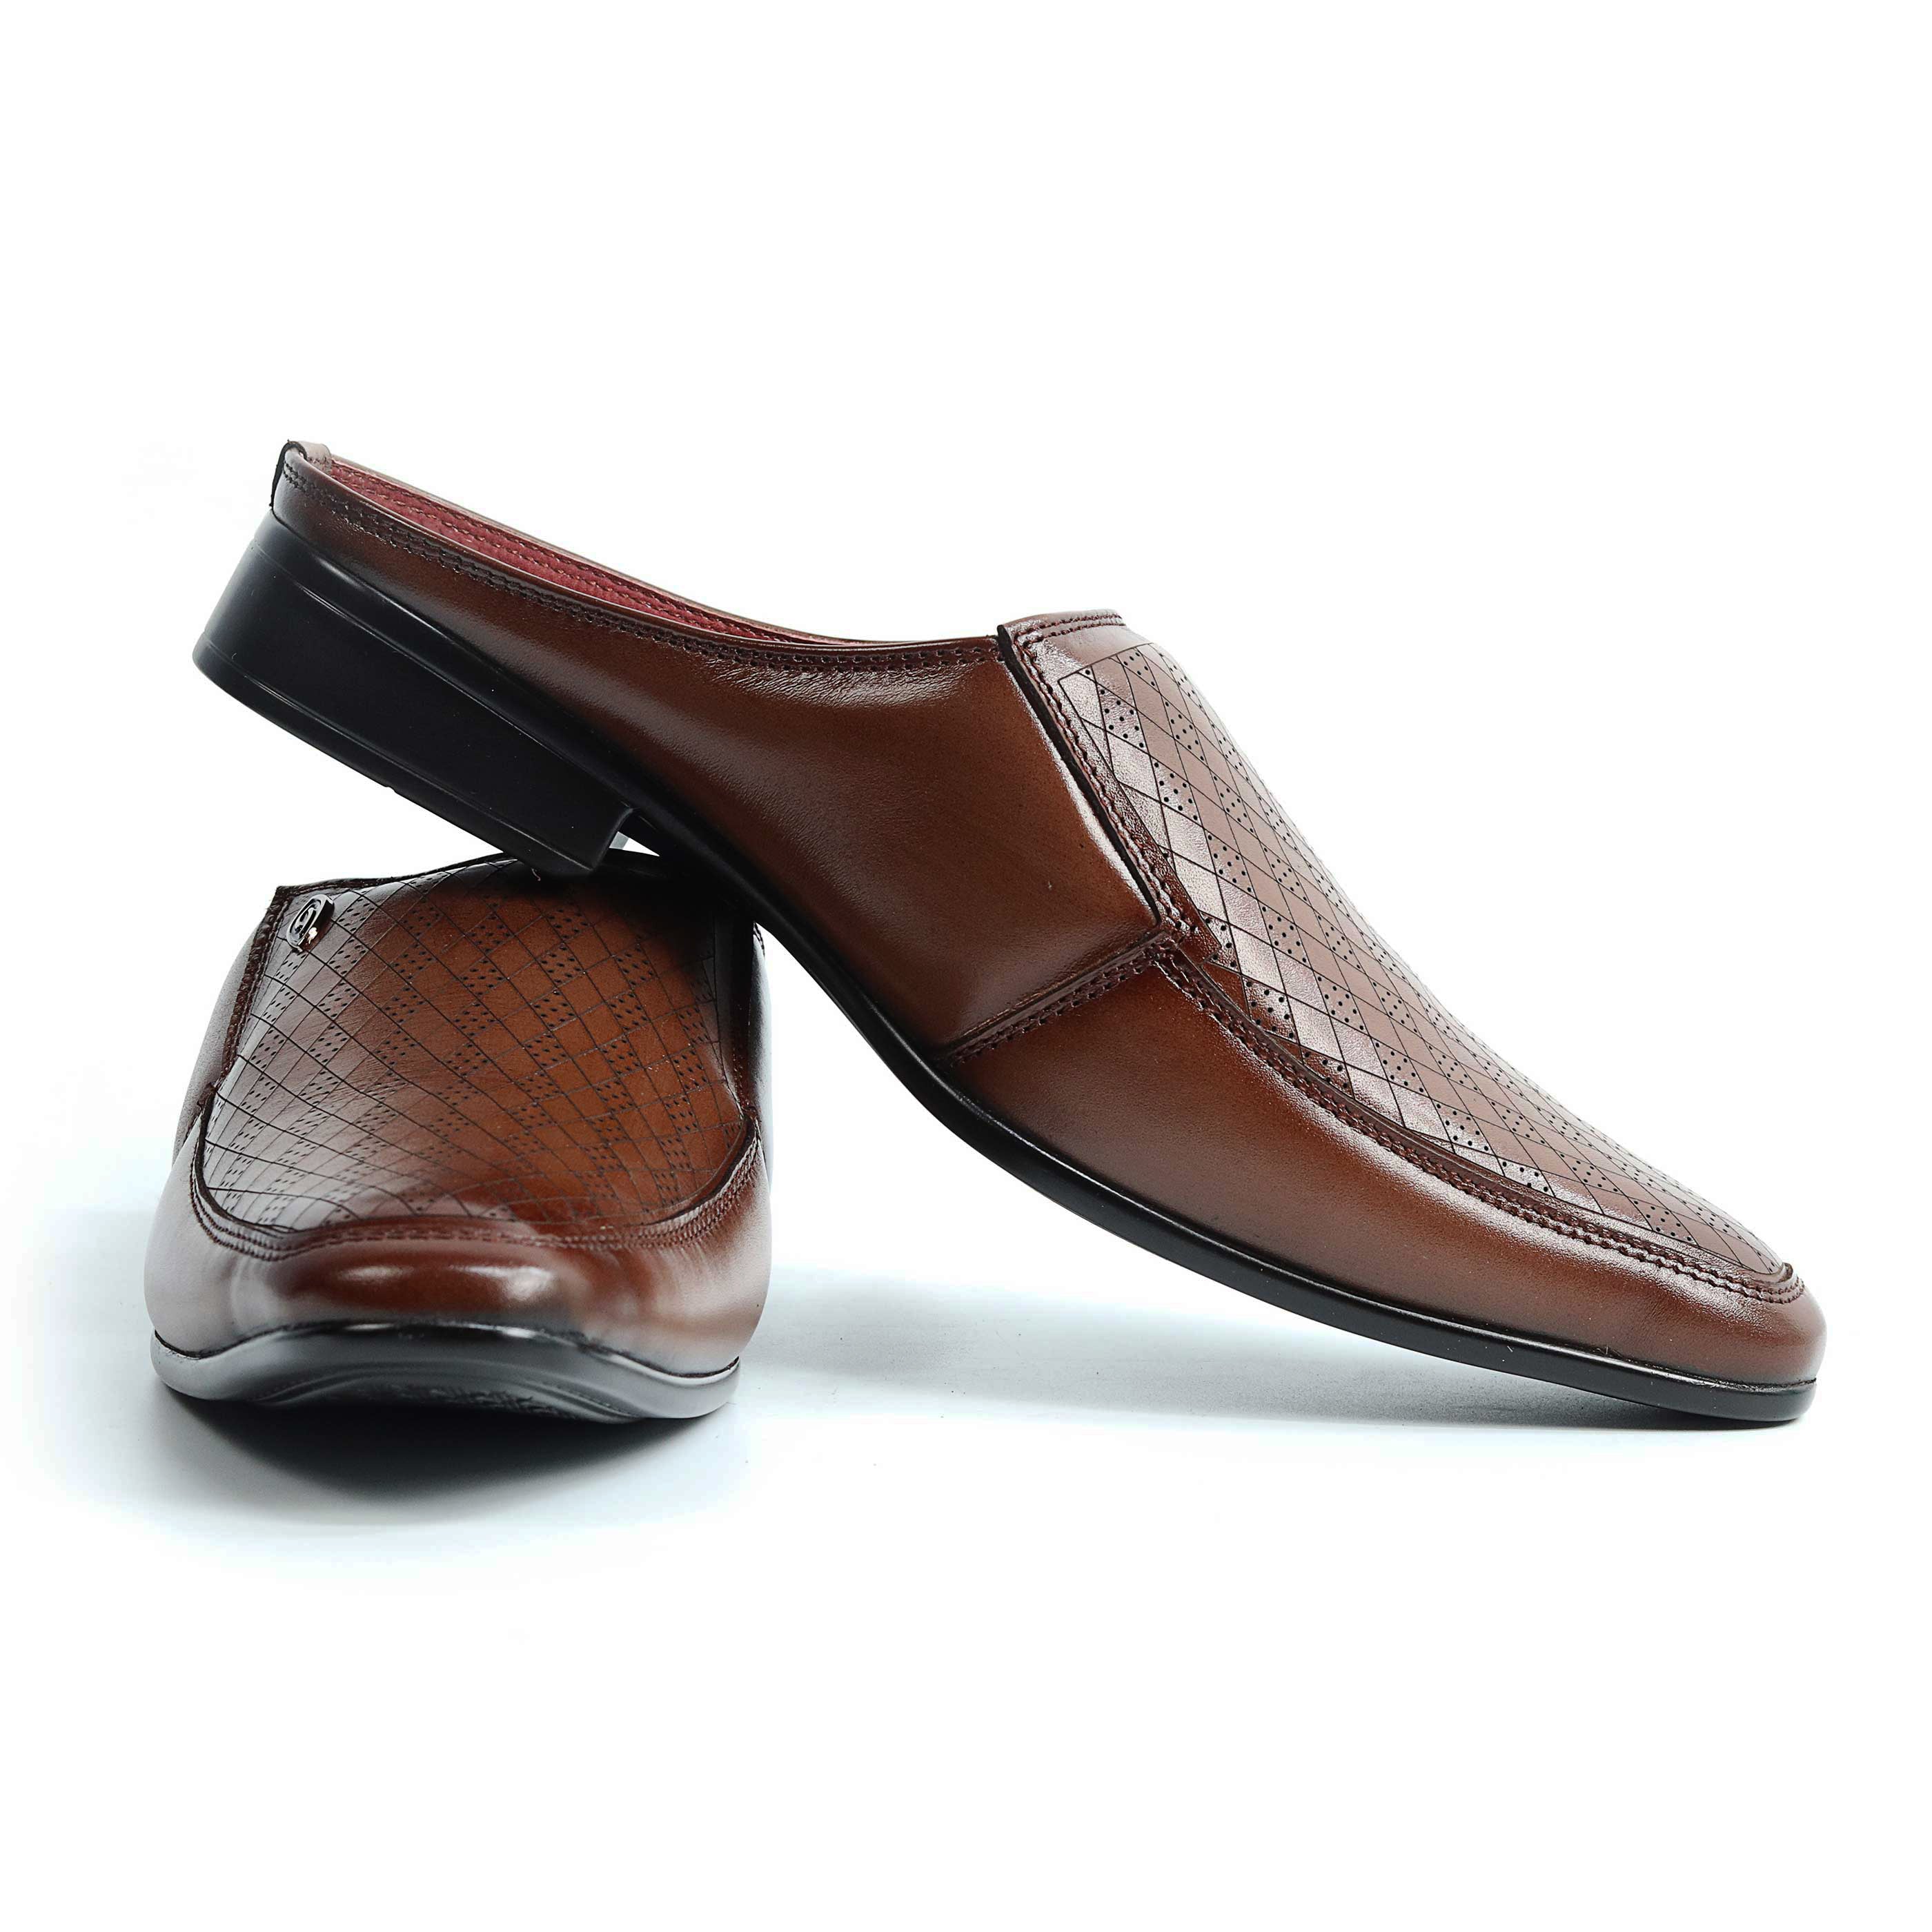 Zays Leather Premium Half Shoe For Men (Brown) - ZAYSSF20